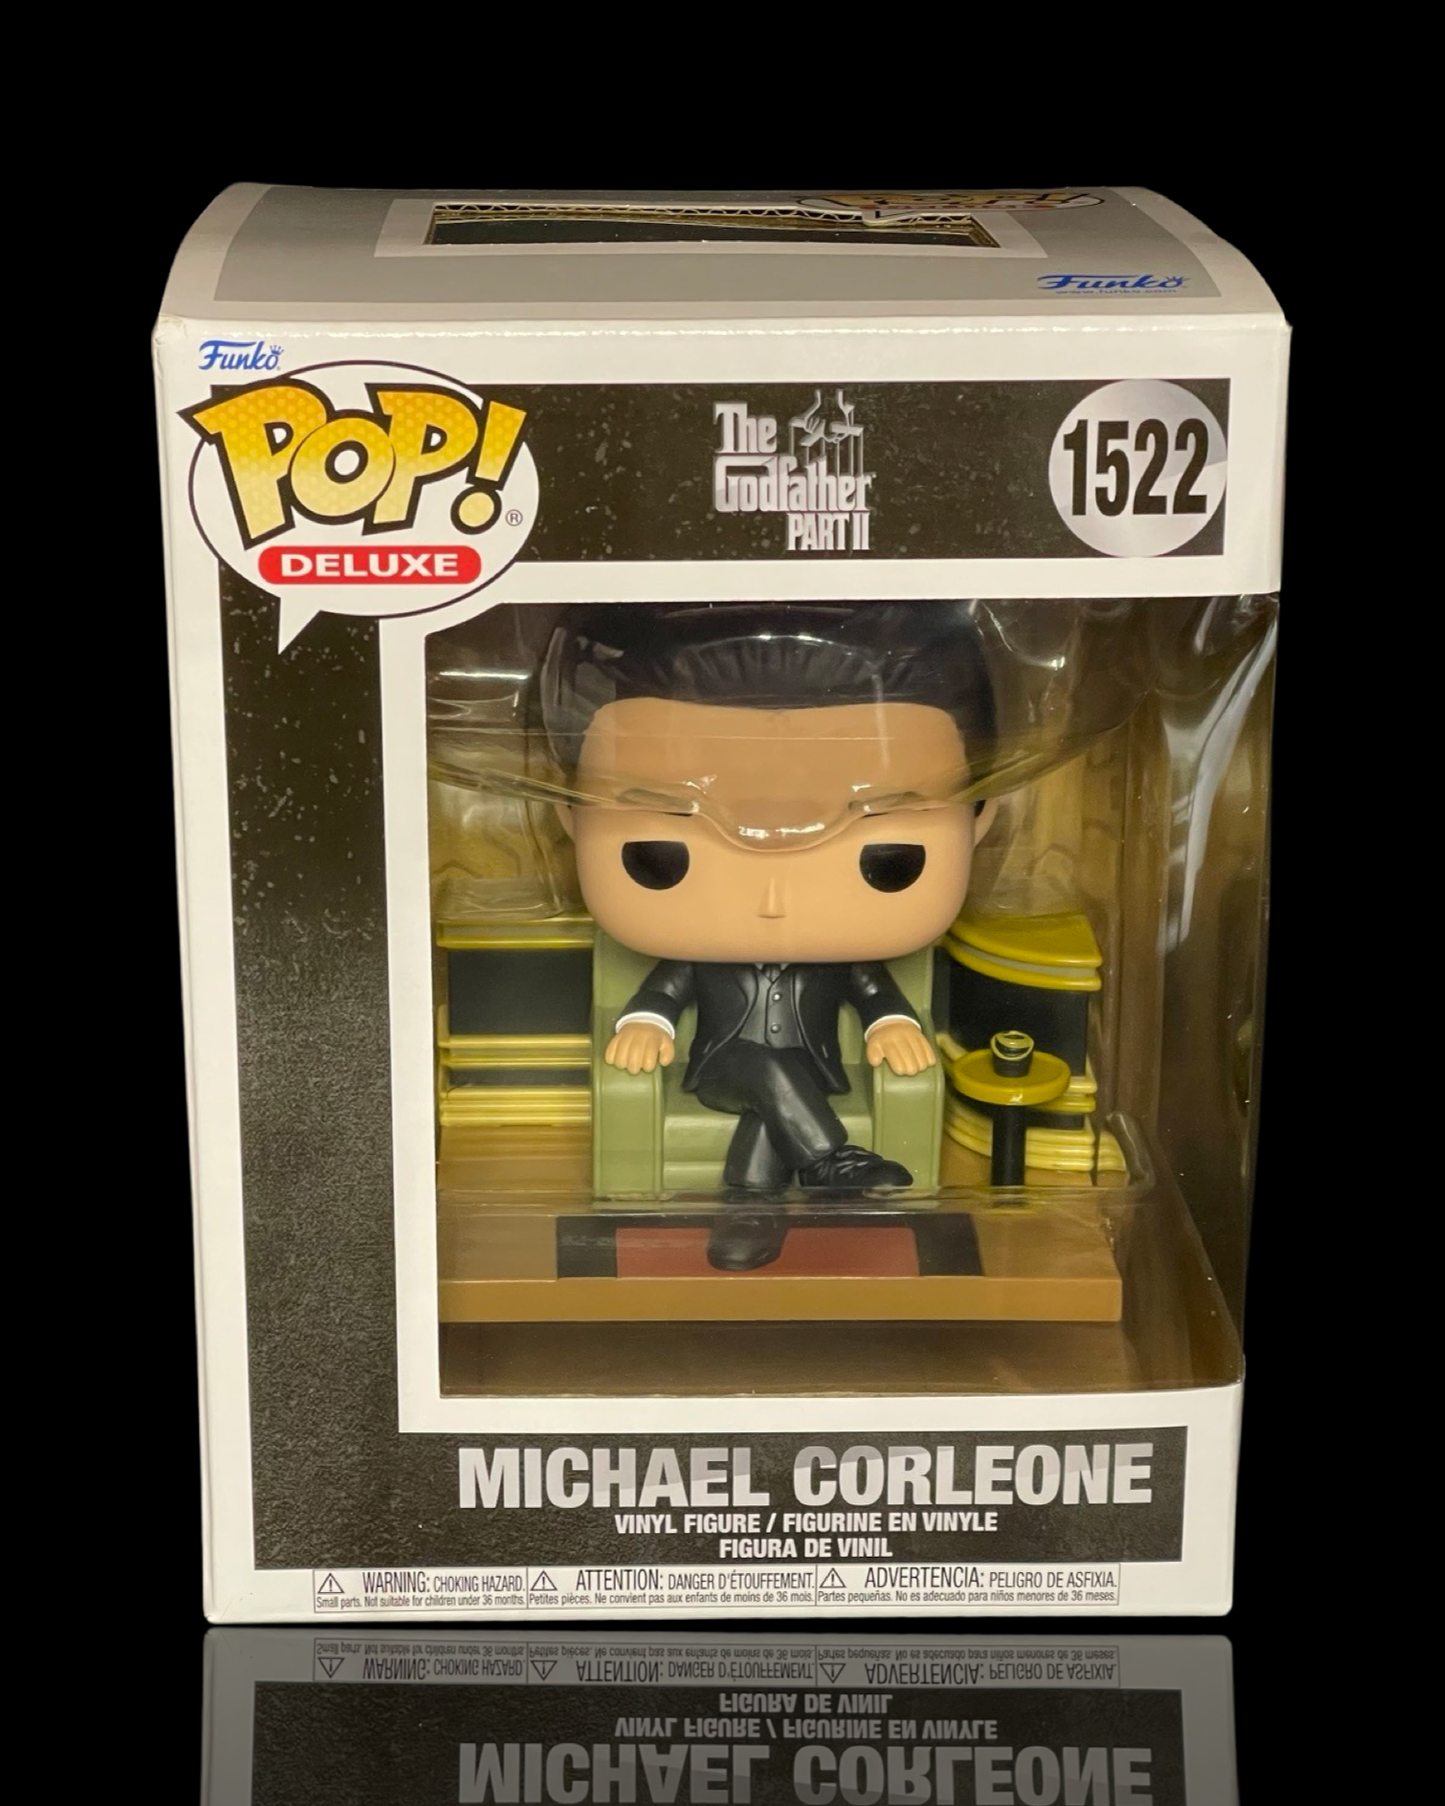 The Godfather Part II: Michael Corleone